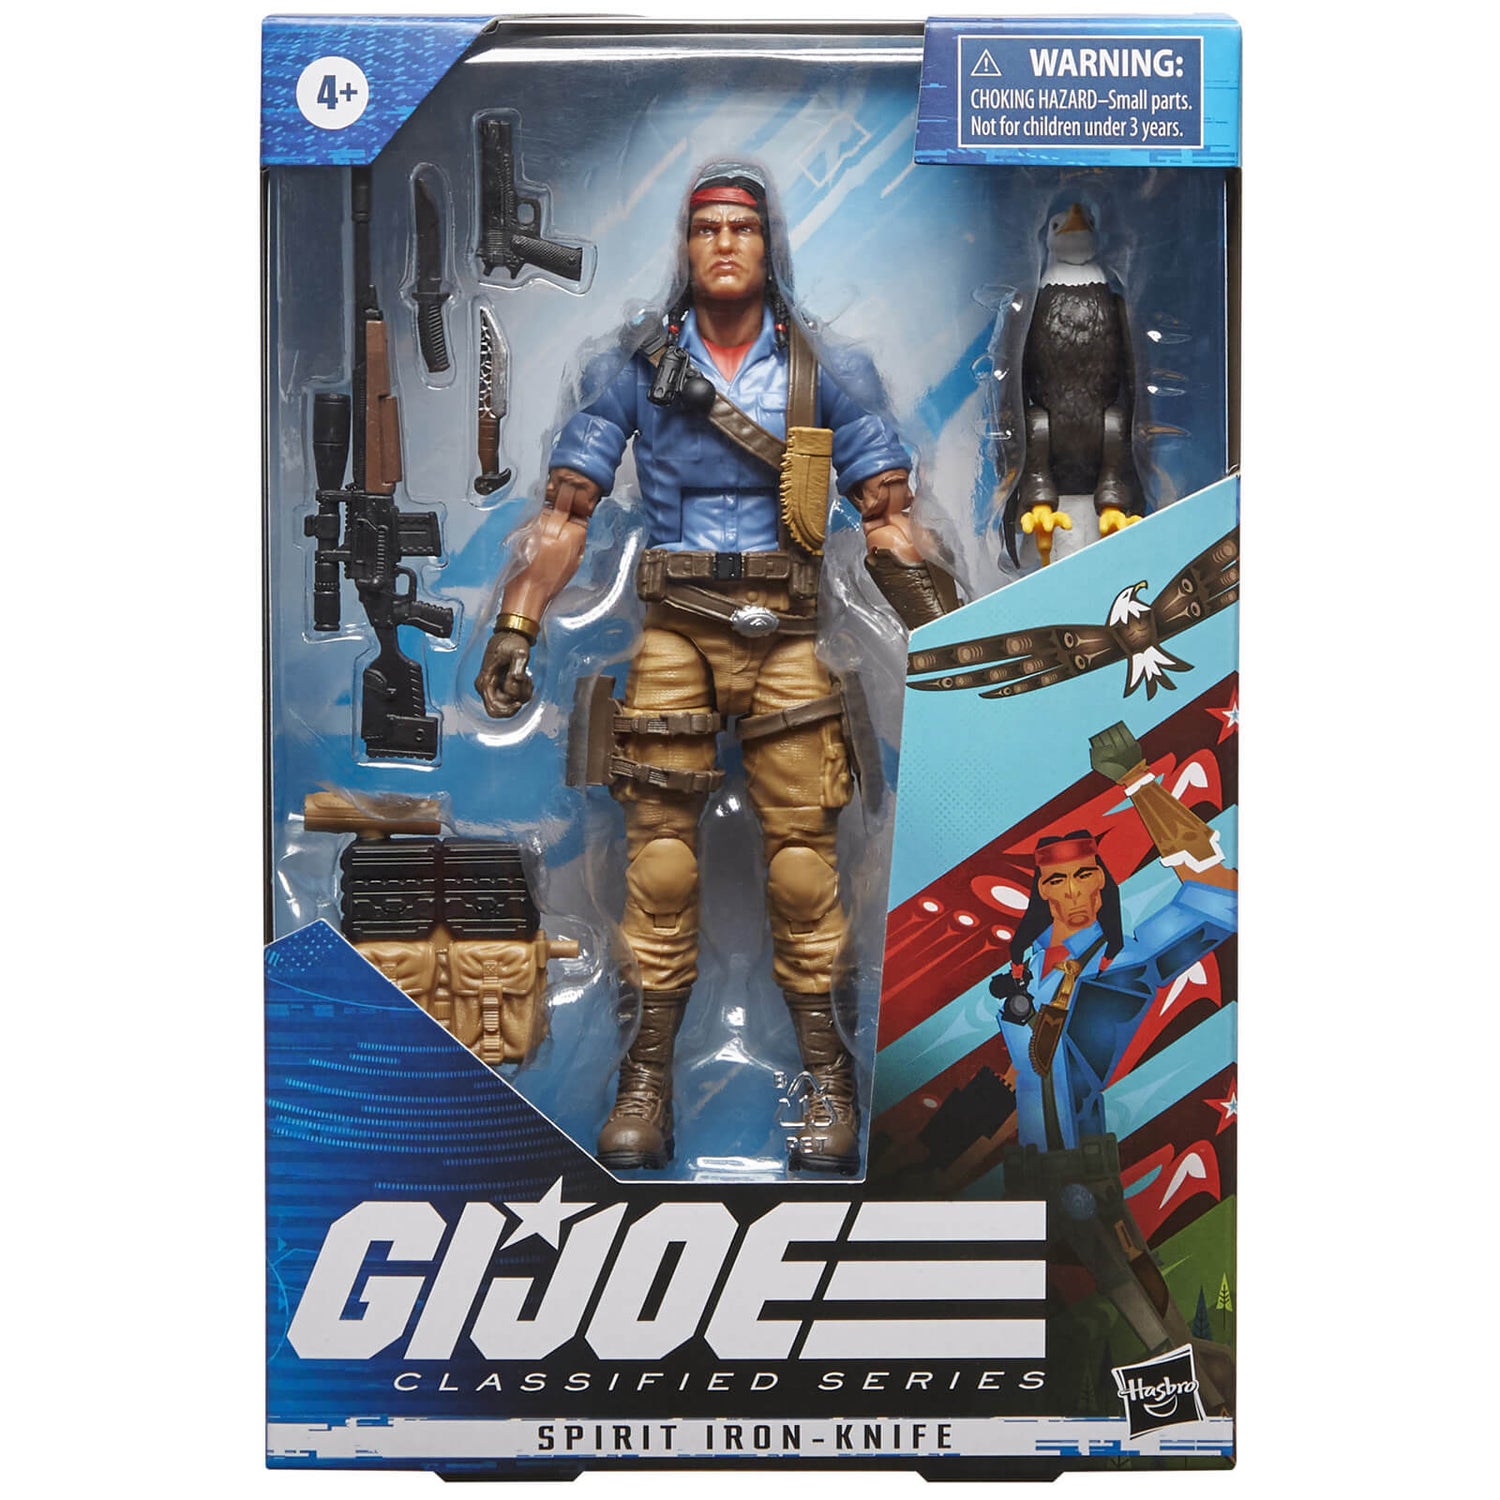 Hasbro G.I. Joe Classified Series Spirit Iron-Knife Action Figure